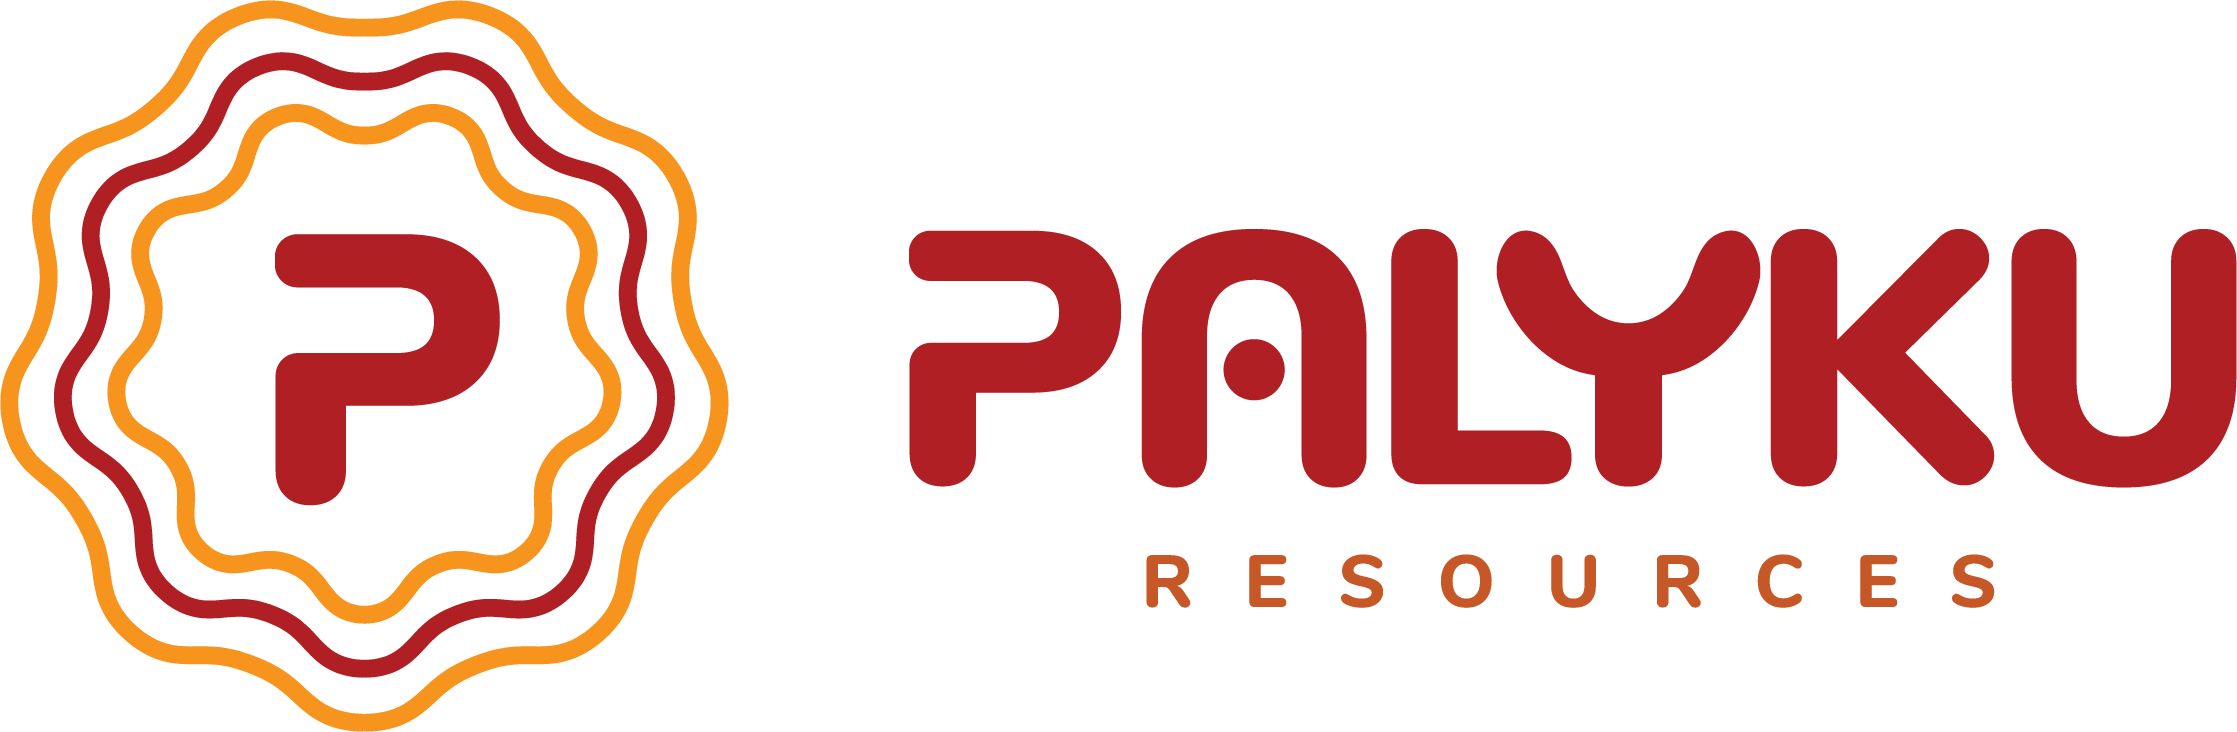 Palyku Resources